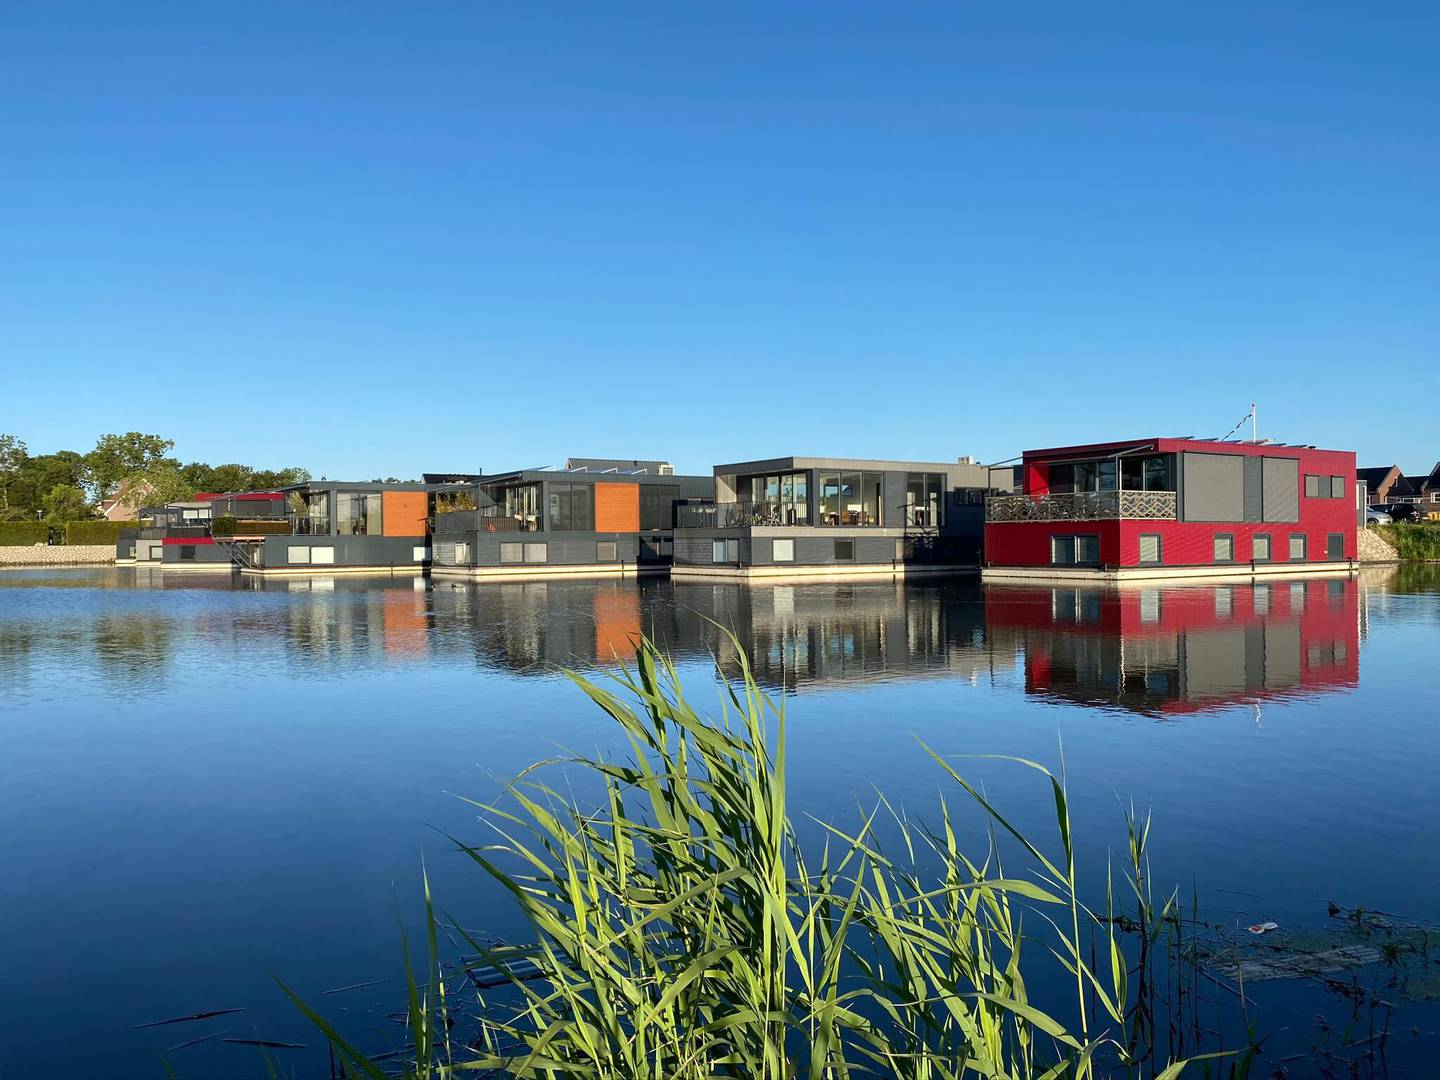 A floating community of seven water villas in Urk, the Netherlands. Photo: Waterstudio.NL

